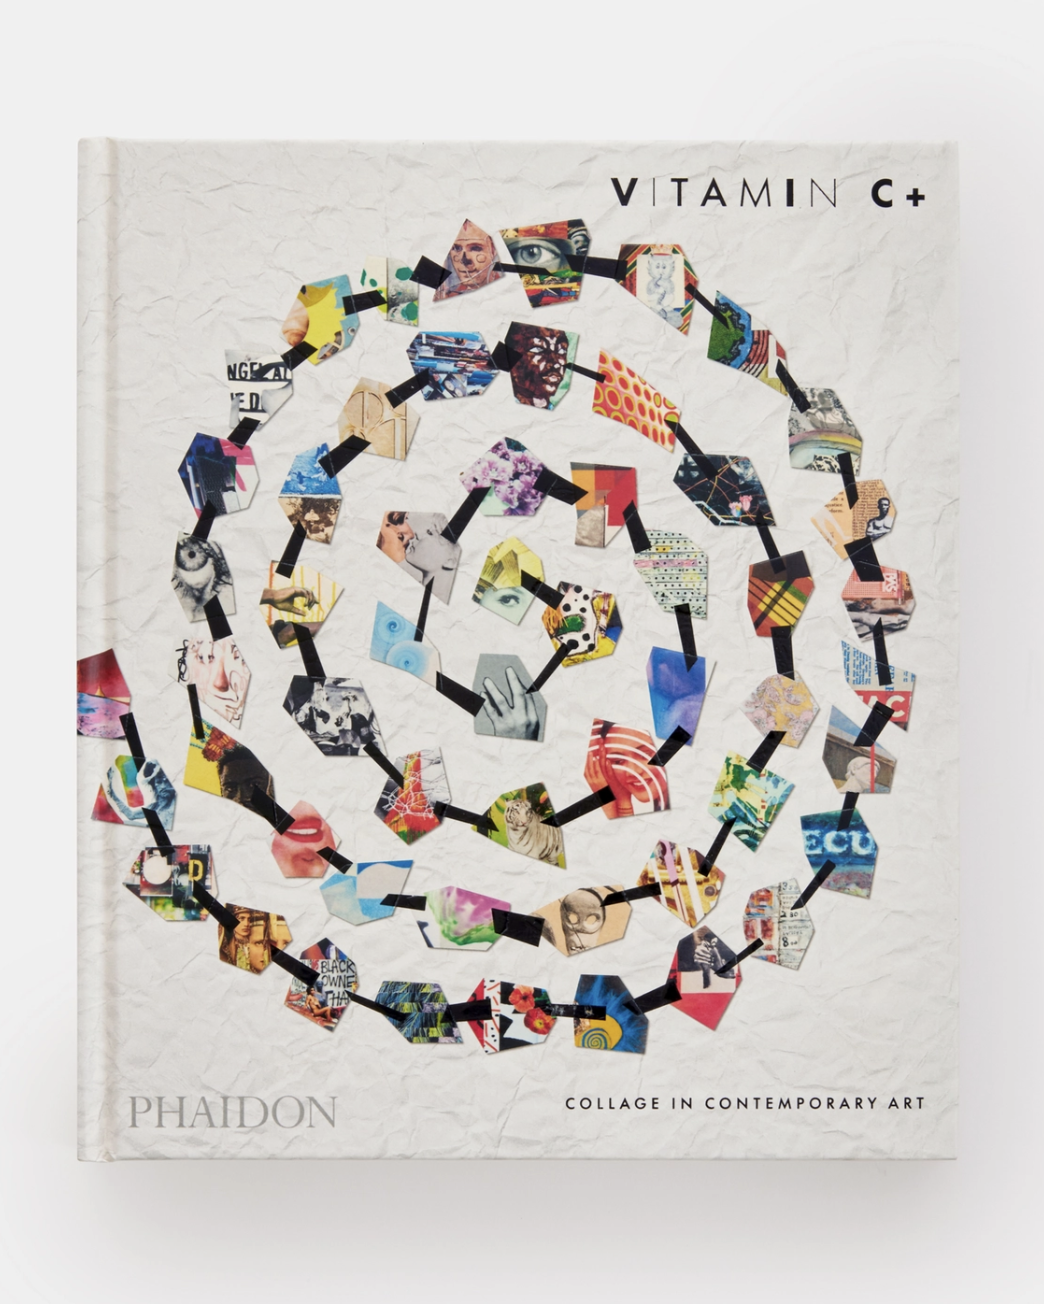 Etgar, Yuval. Vitamin C+: Collage in Contemporary Art. Londres: Phaidon Press